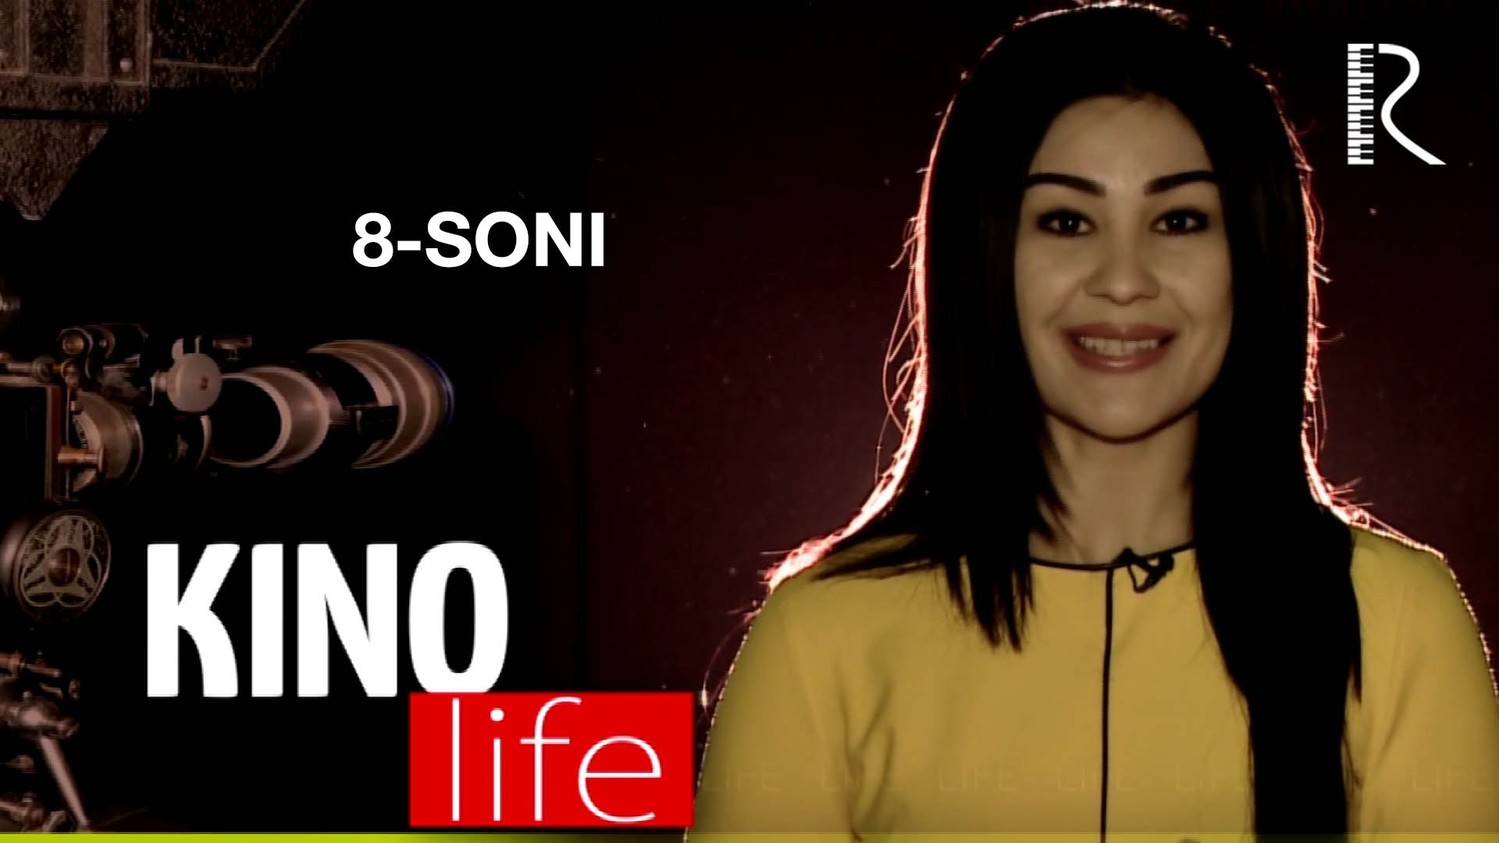 Kino life - 8-soni | Кино лайф - 8-сони